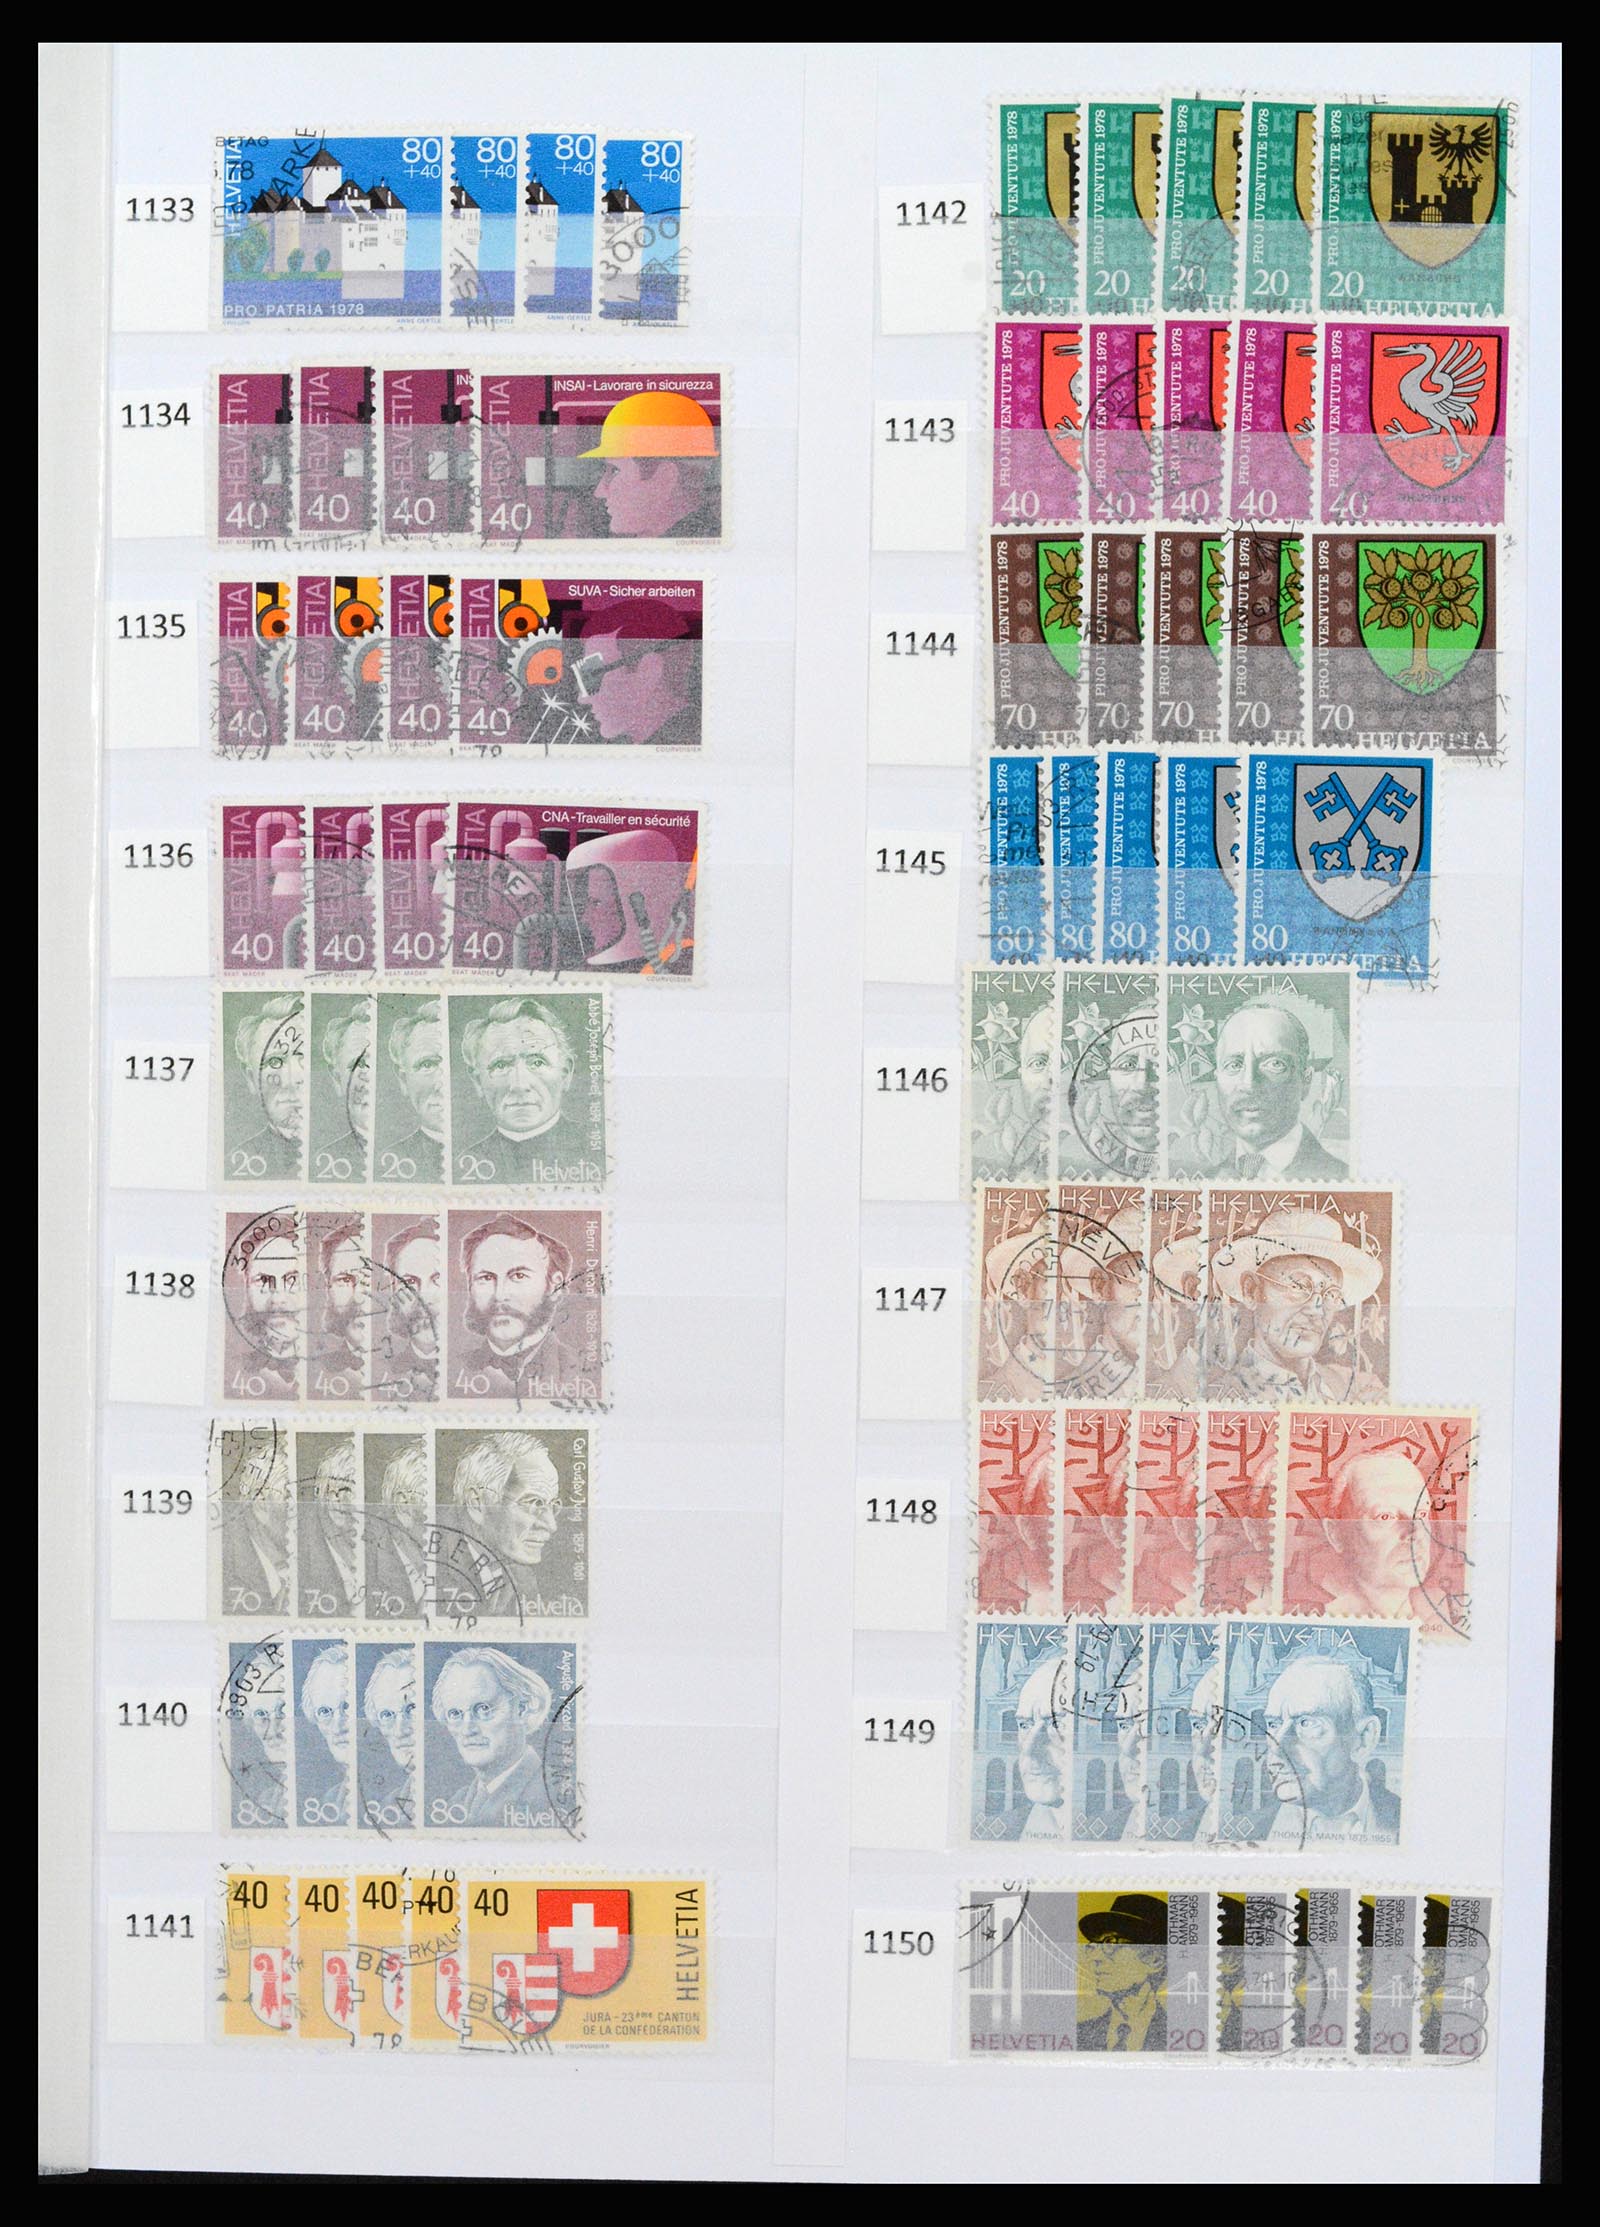 37252 064 - Stamp collection 37252 Switzerland 1900-2011.